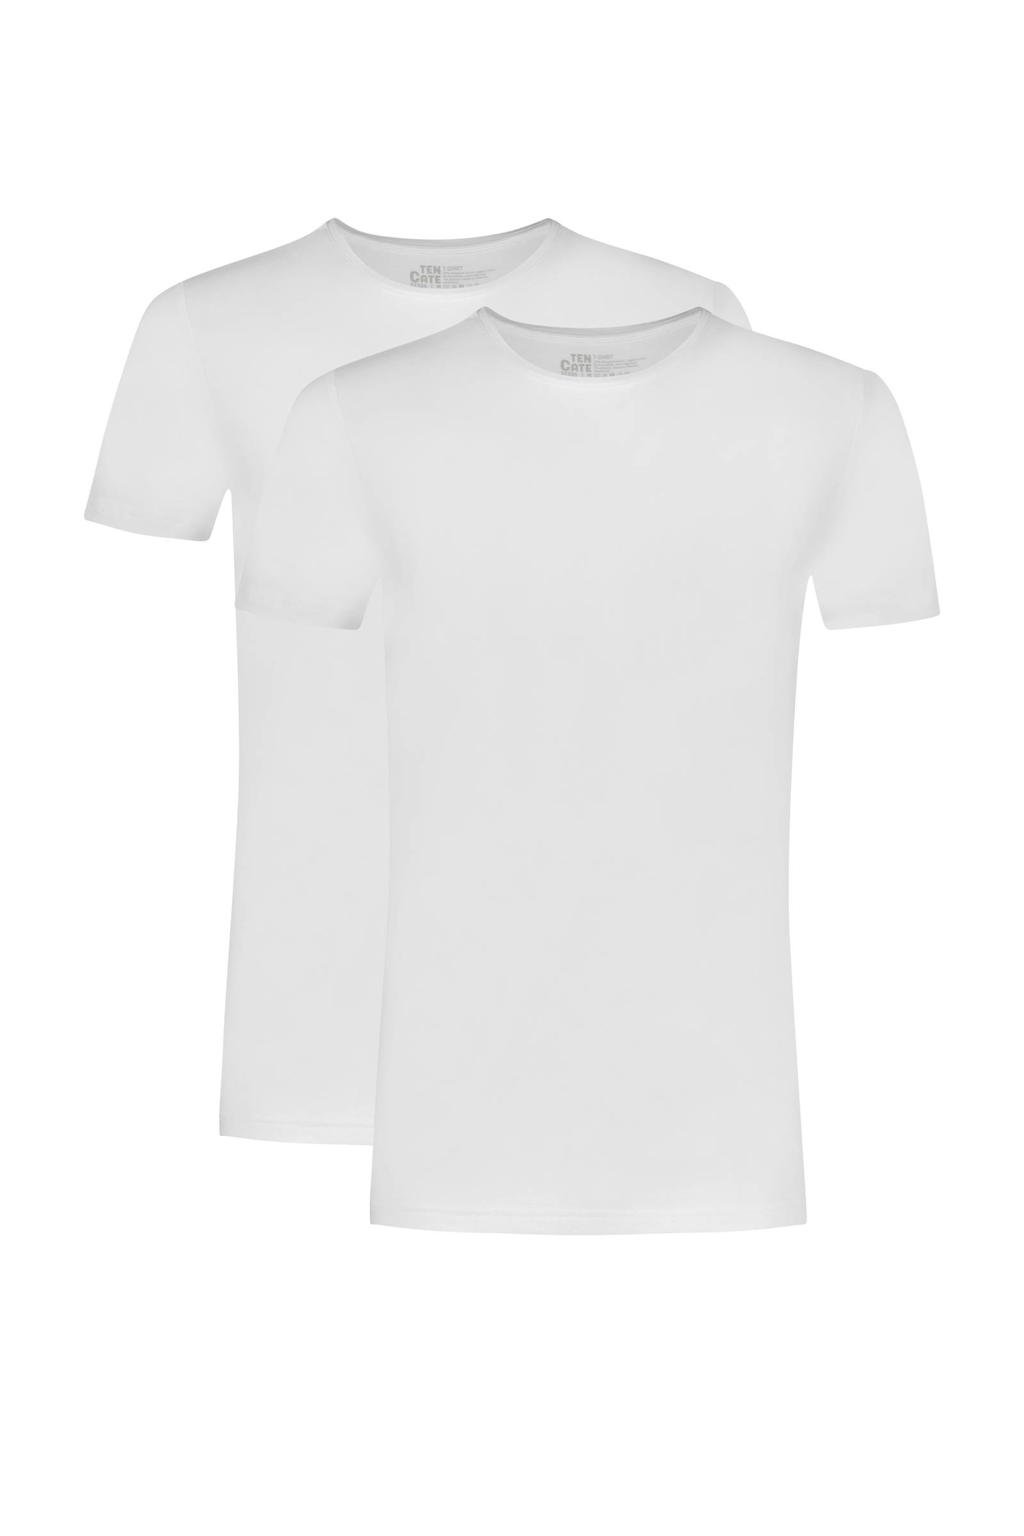 ten Cate Basic ondershirt (set van 2) wit